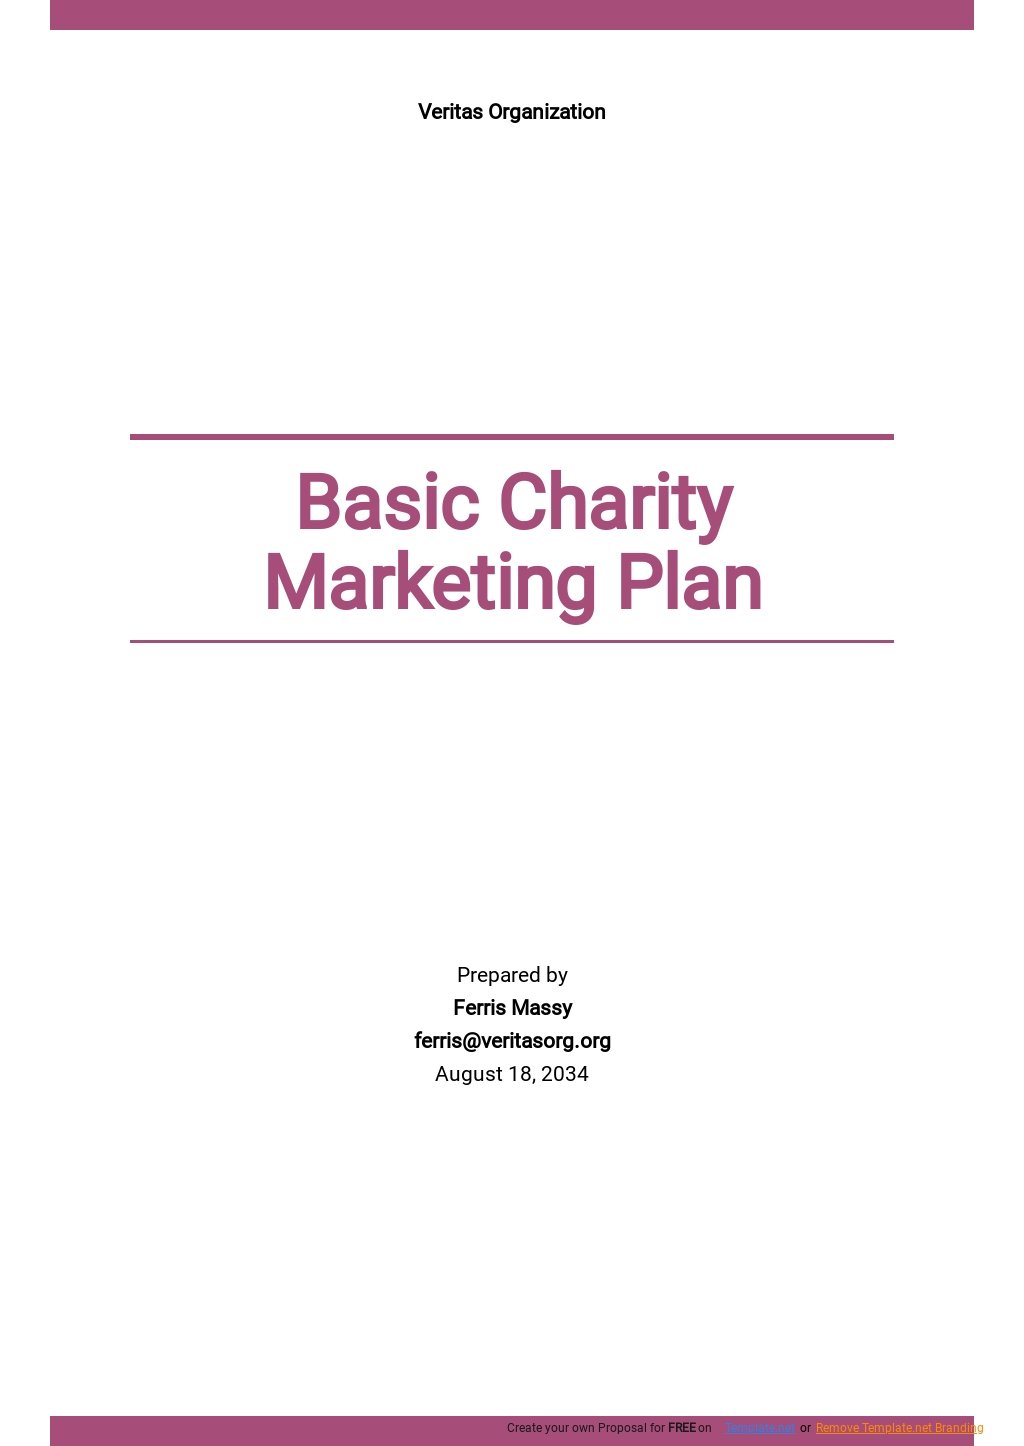 Free Basic Charity Marketing Plan Template